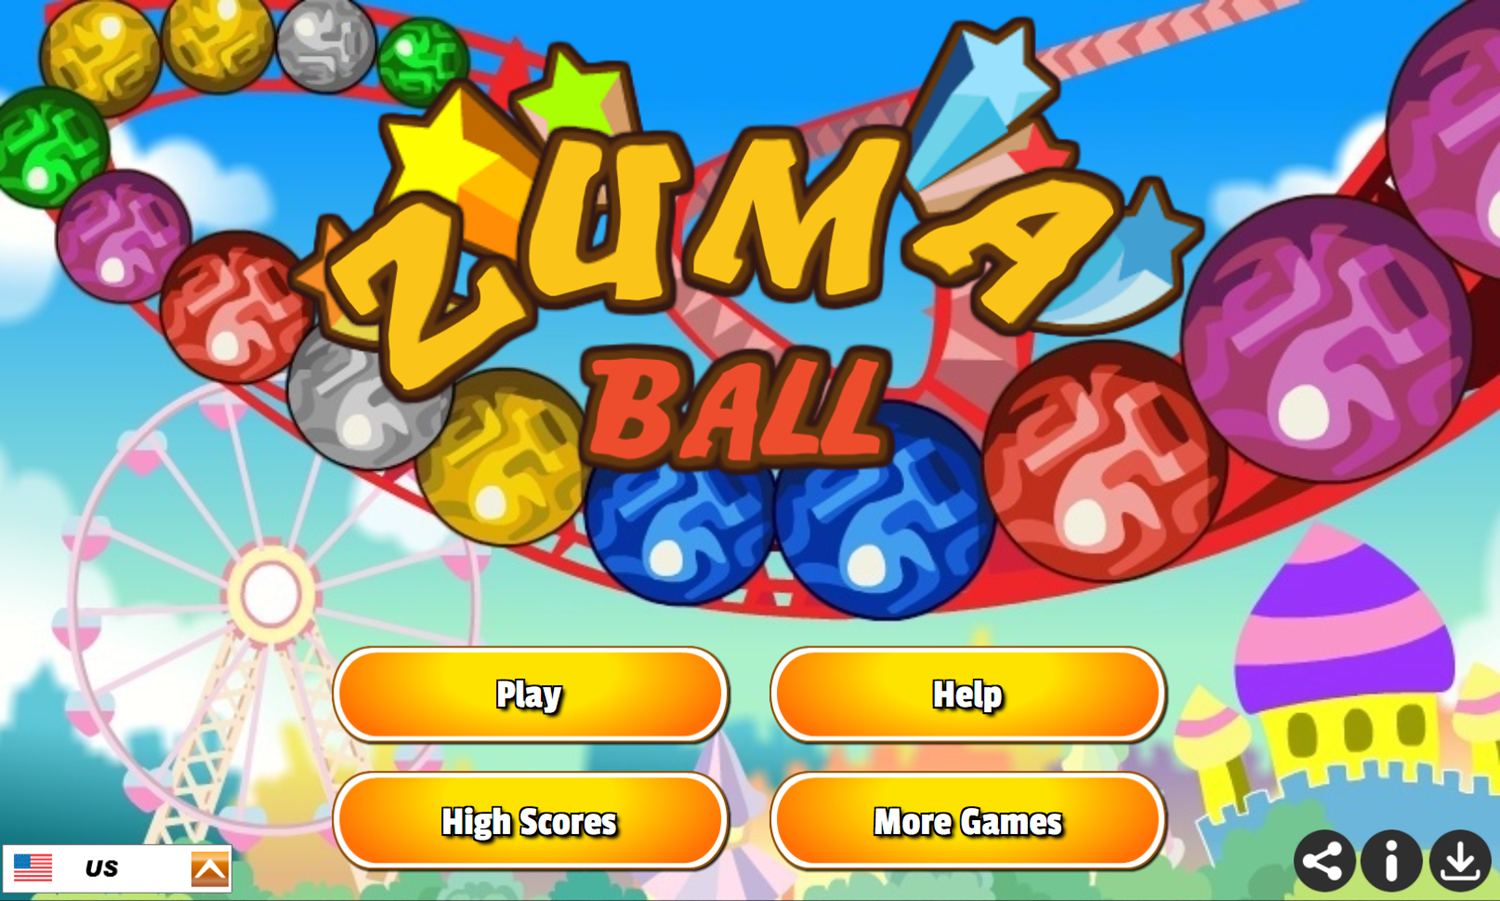 Zuma Ball Game Welcome Screen Screenshot.